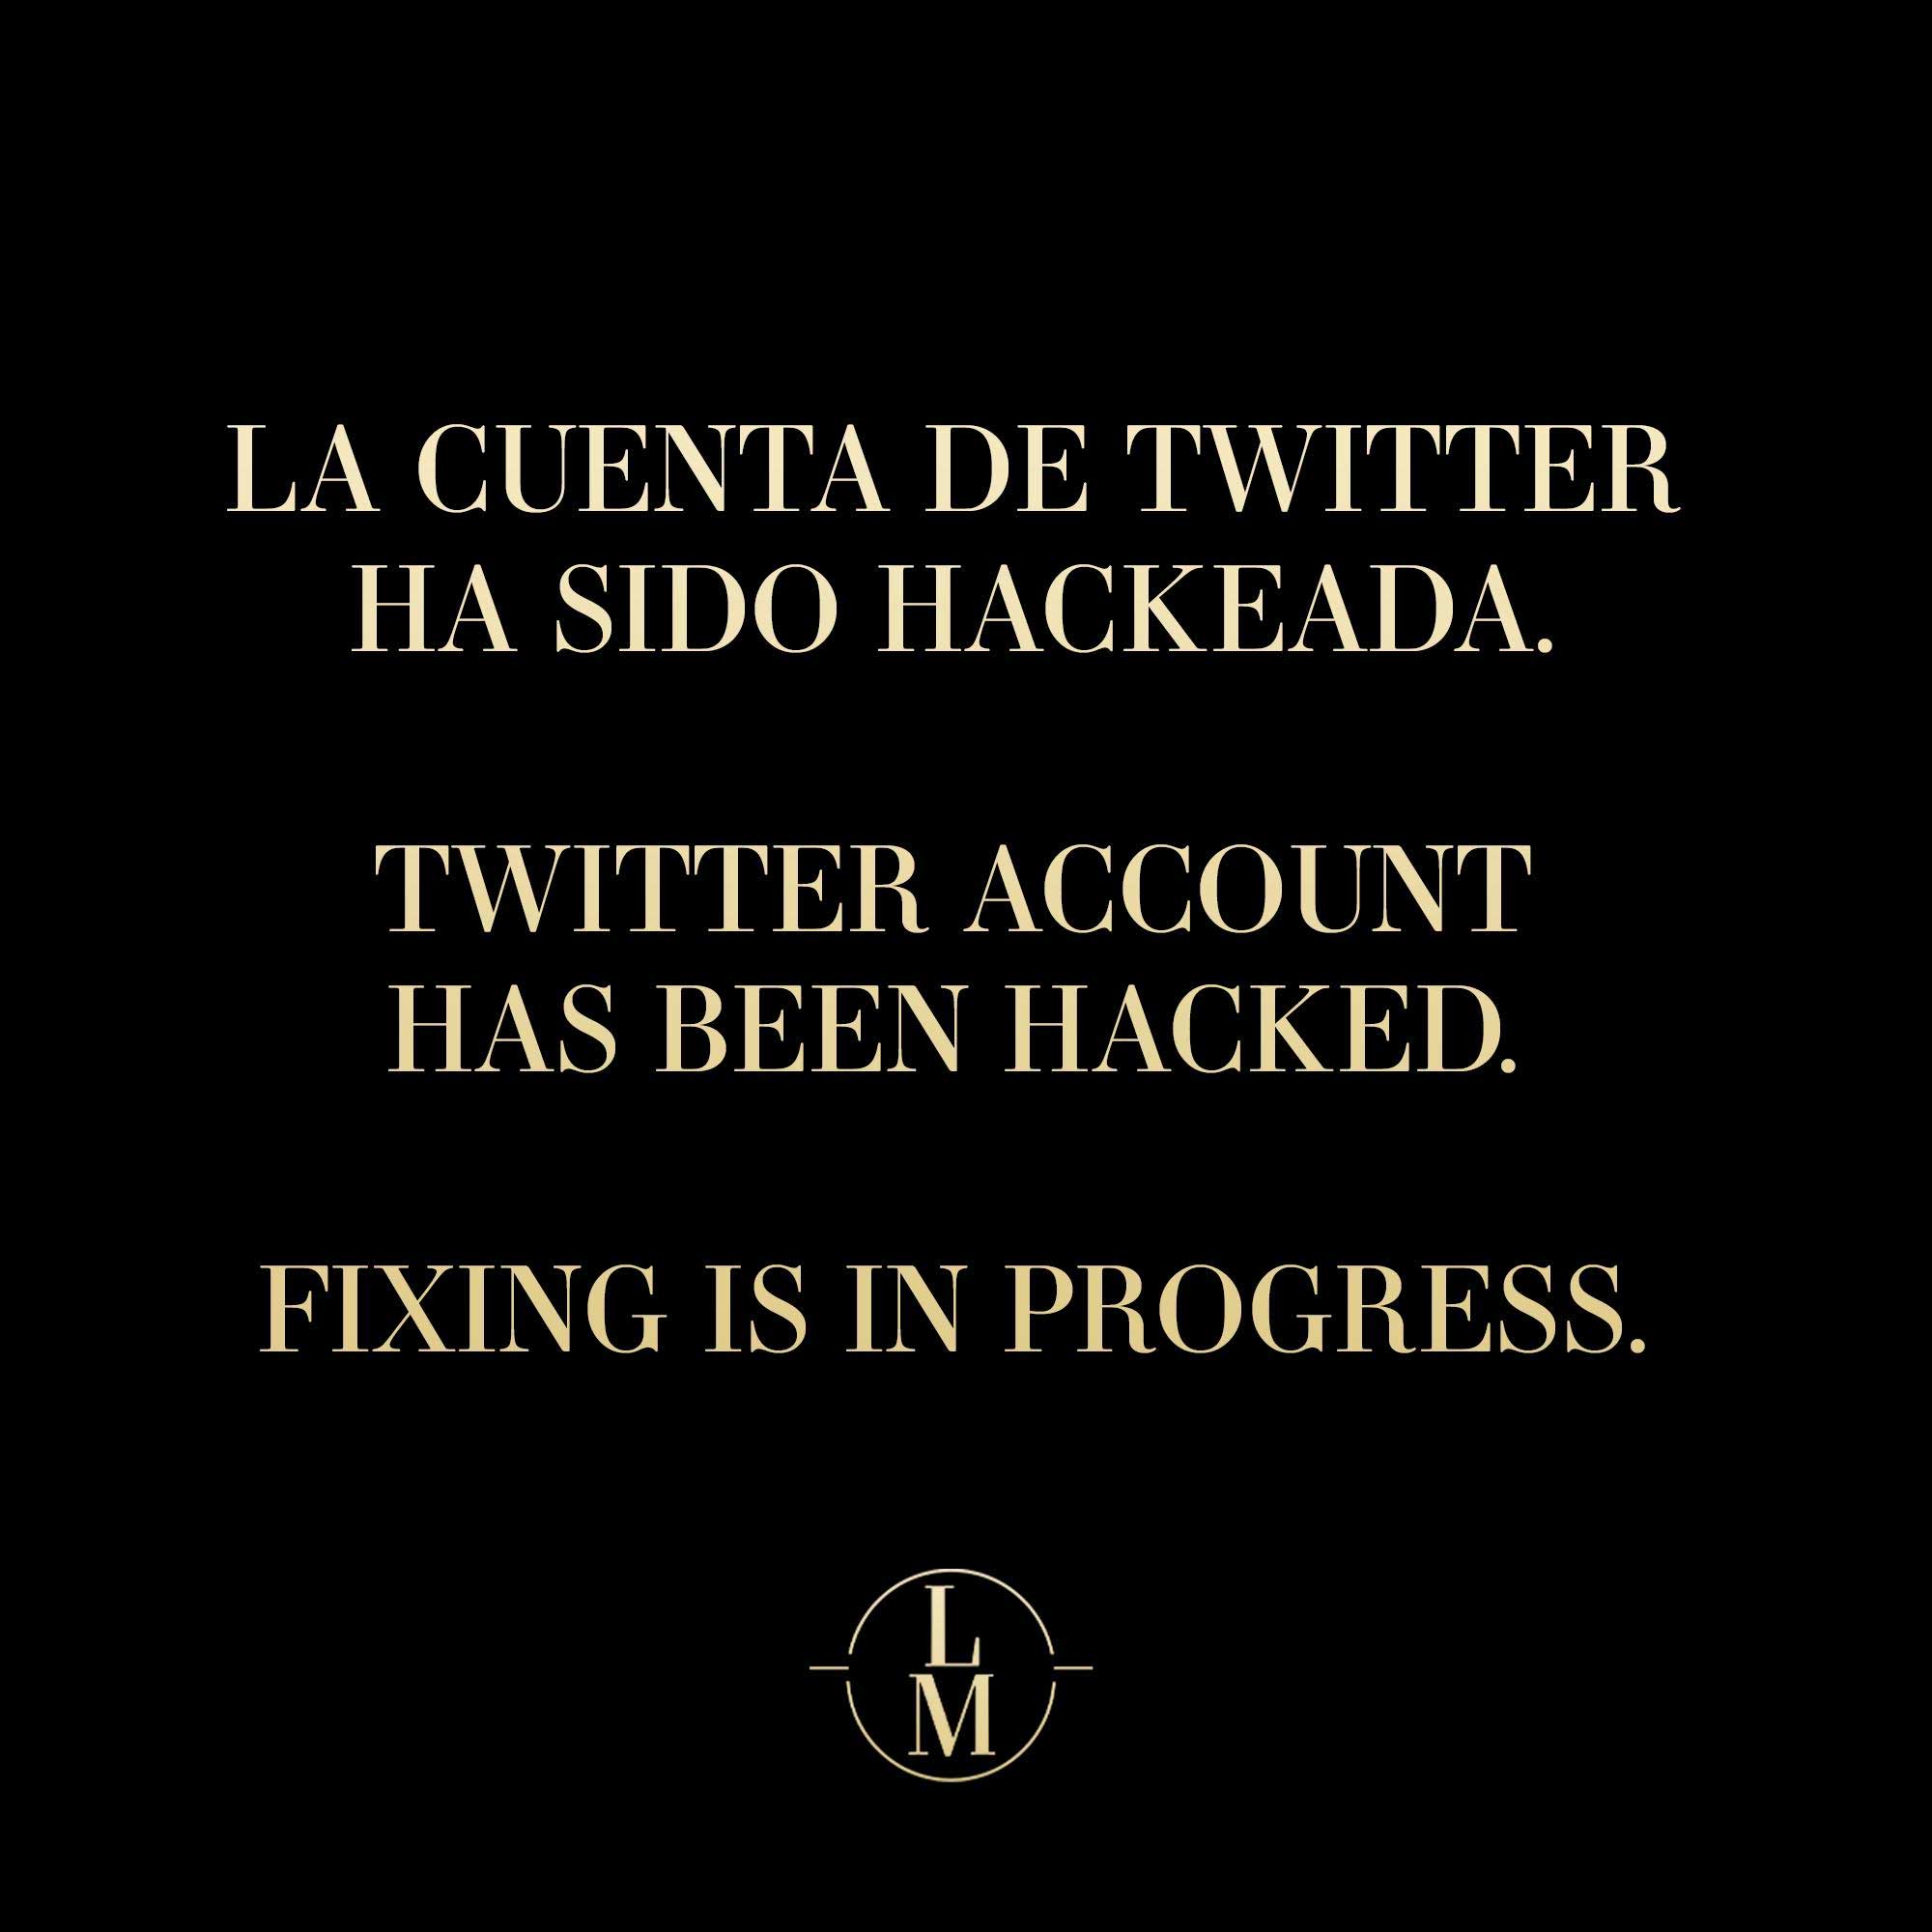 Hackean, Twitter, Luis Miguel